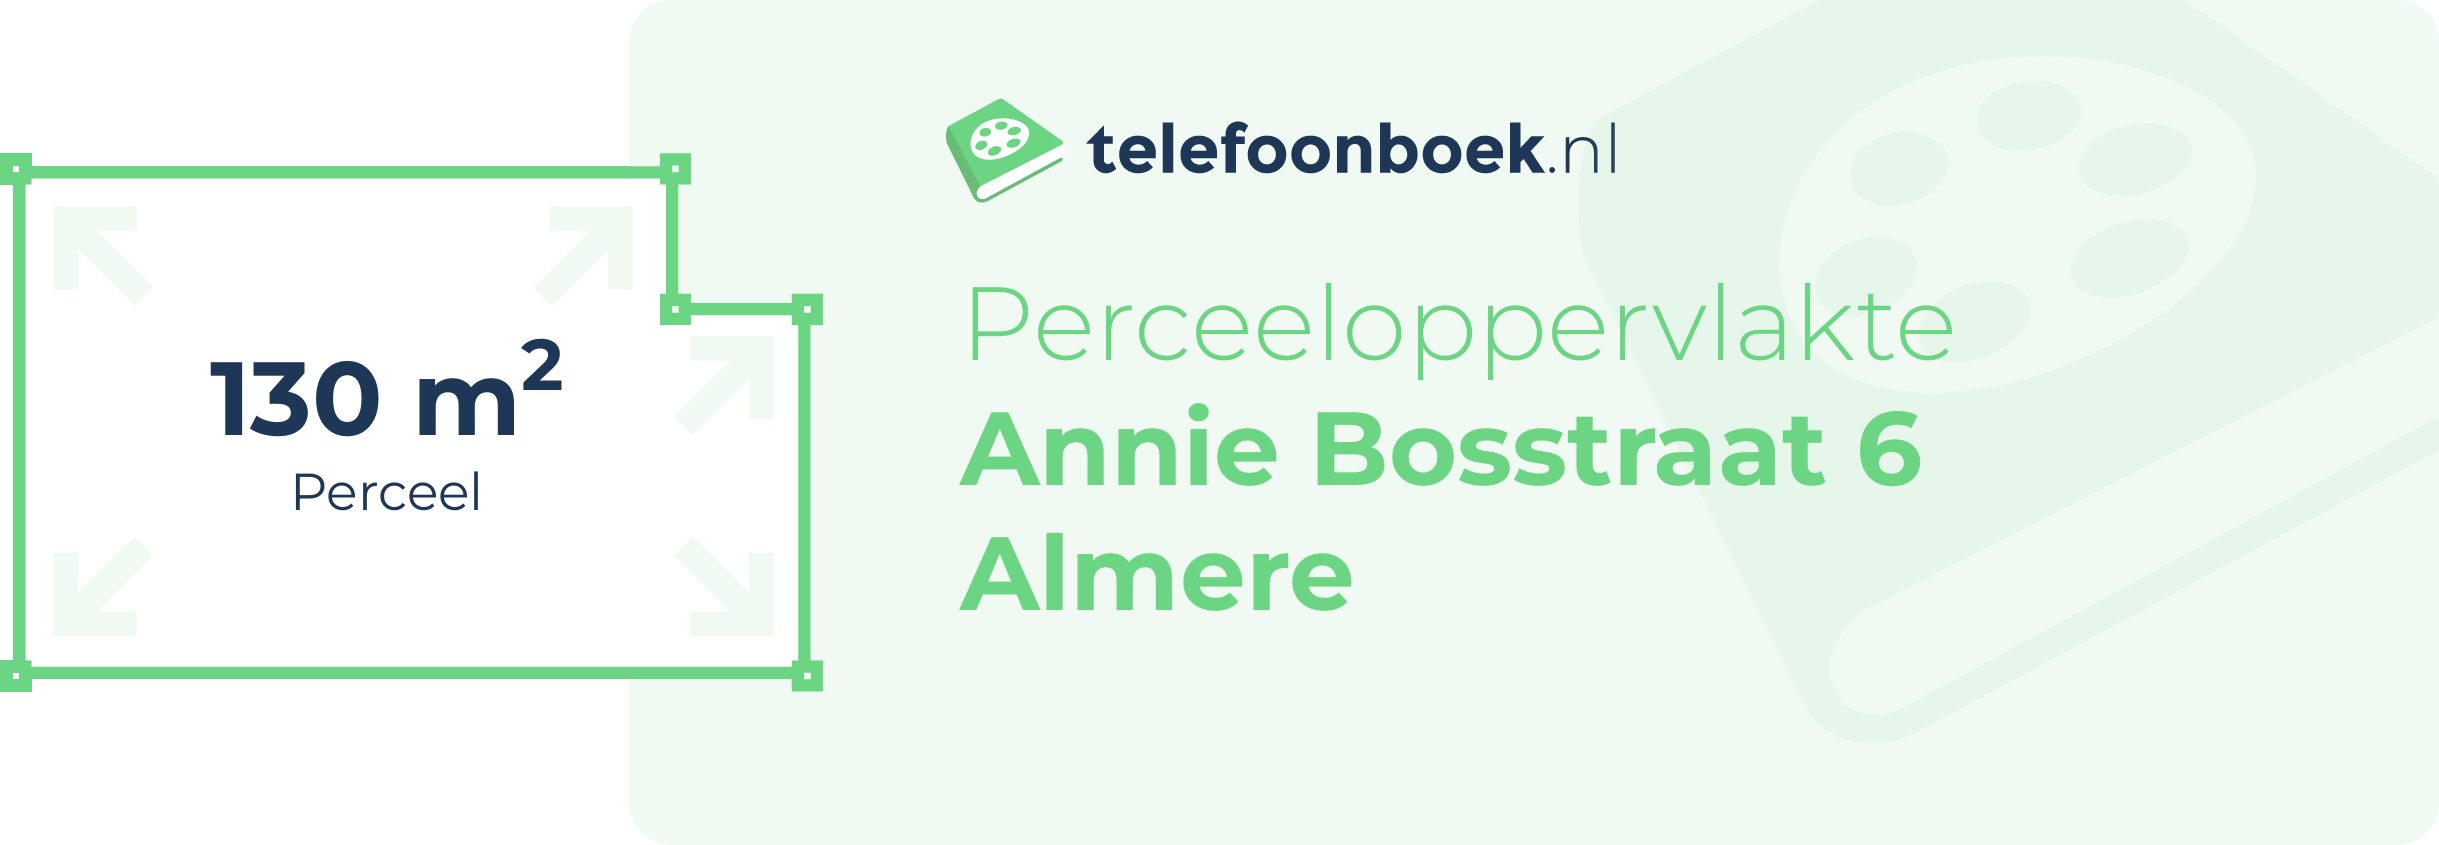 Perceeloppervlakte Annie Bosstraat 6 Almere